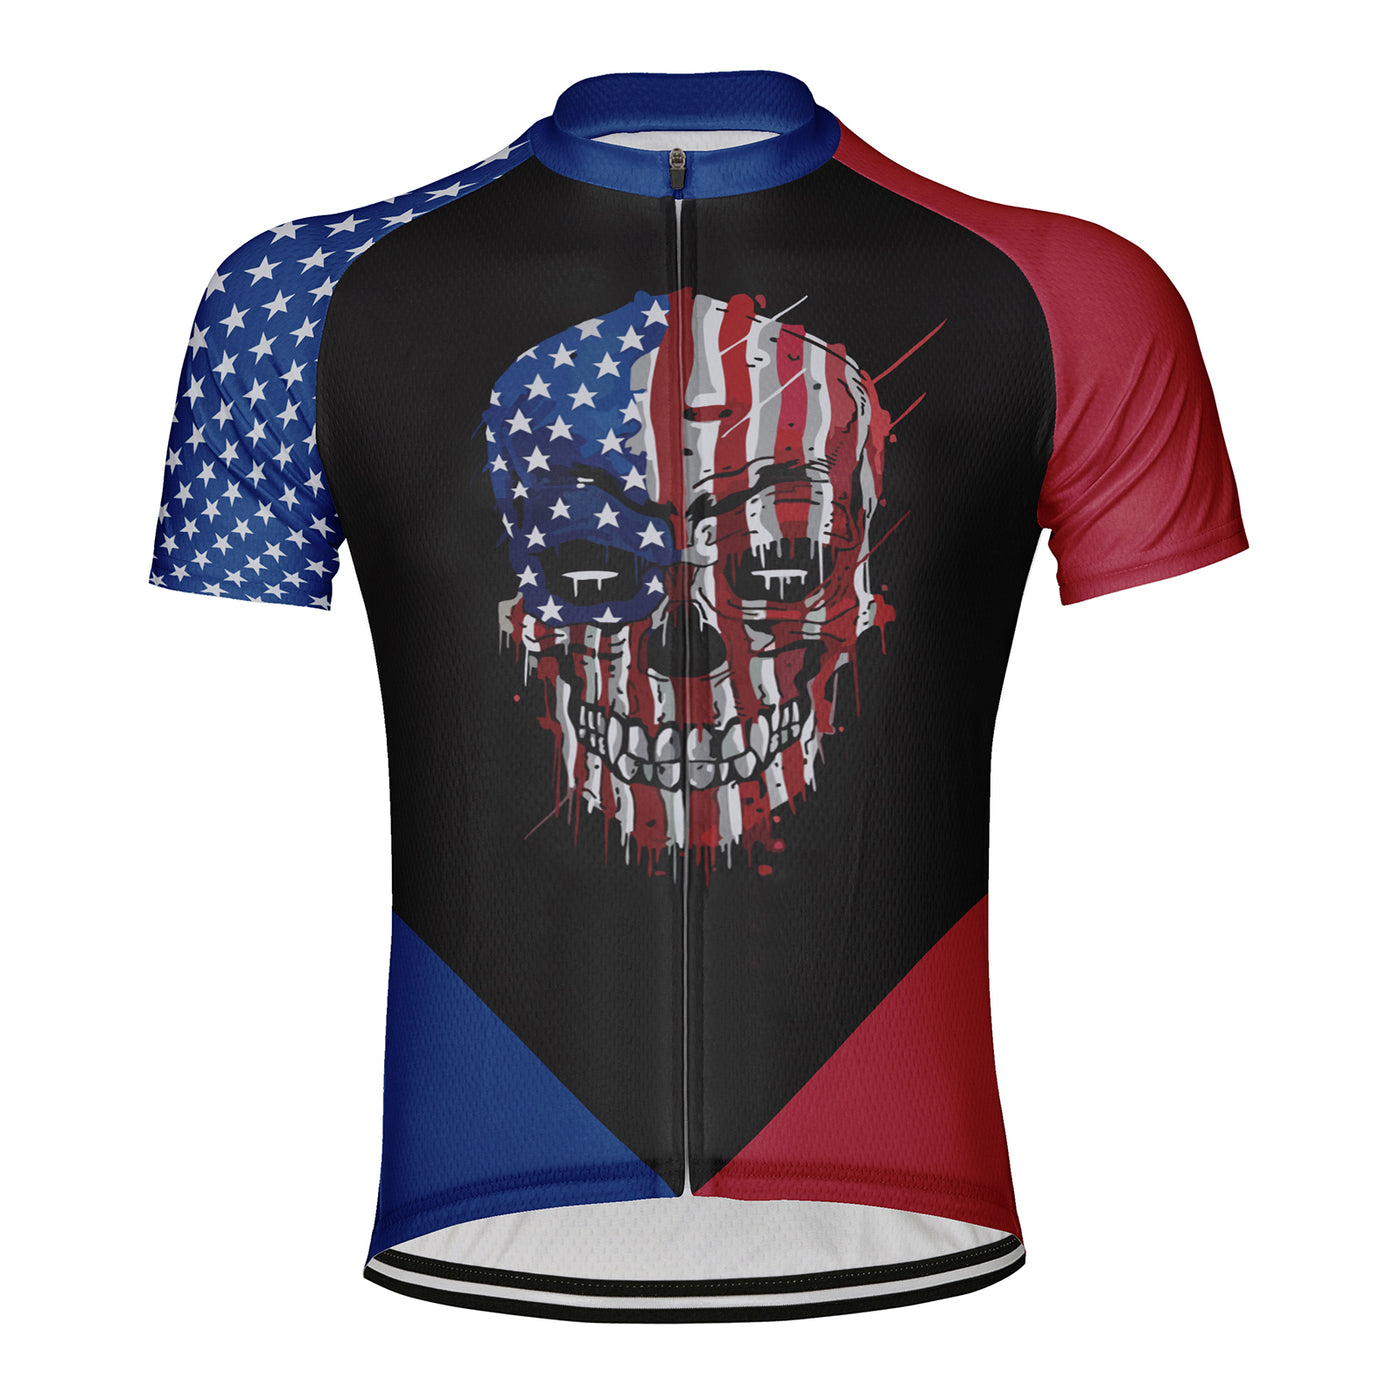 Customized USA America Men's Cycling Jersey Short Sleeve